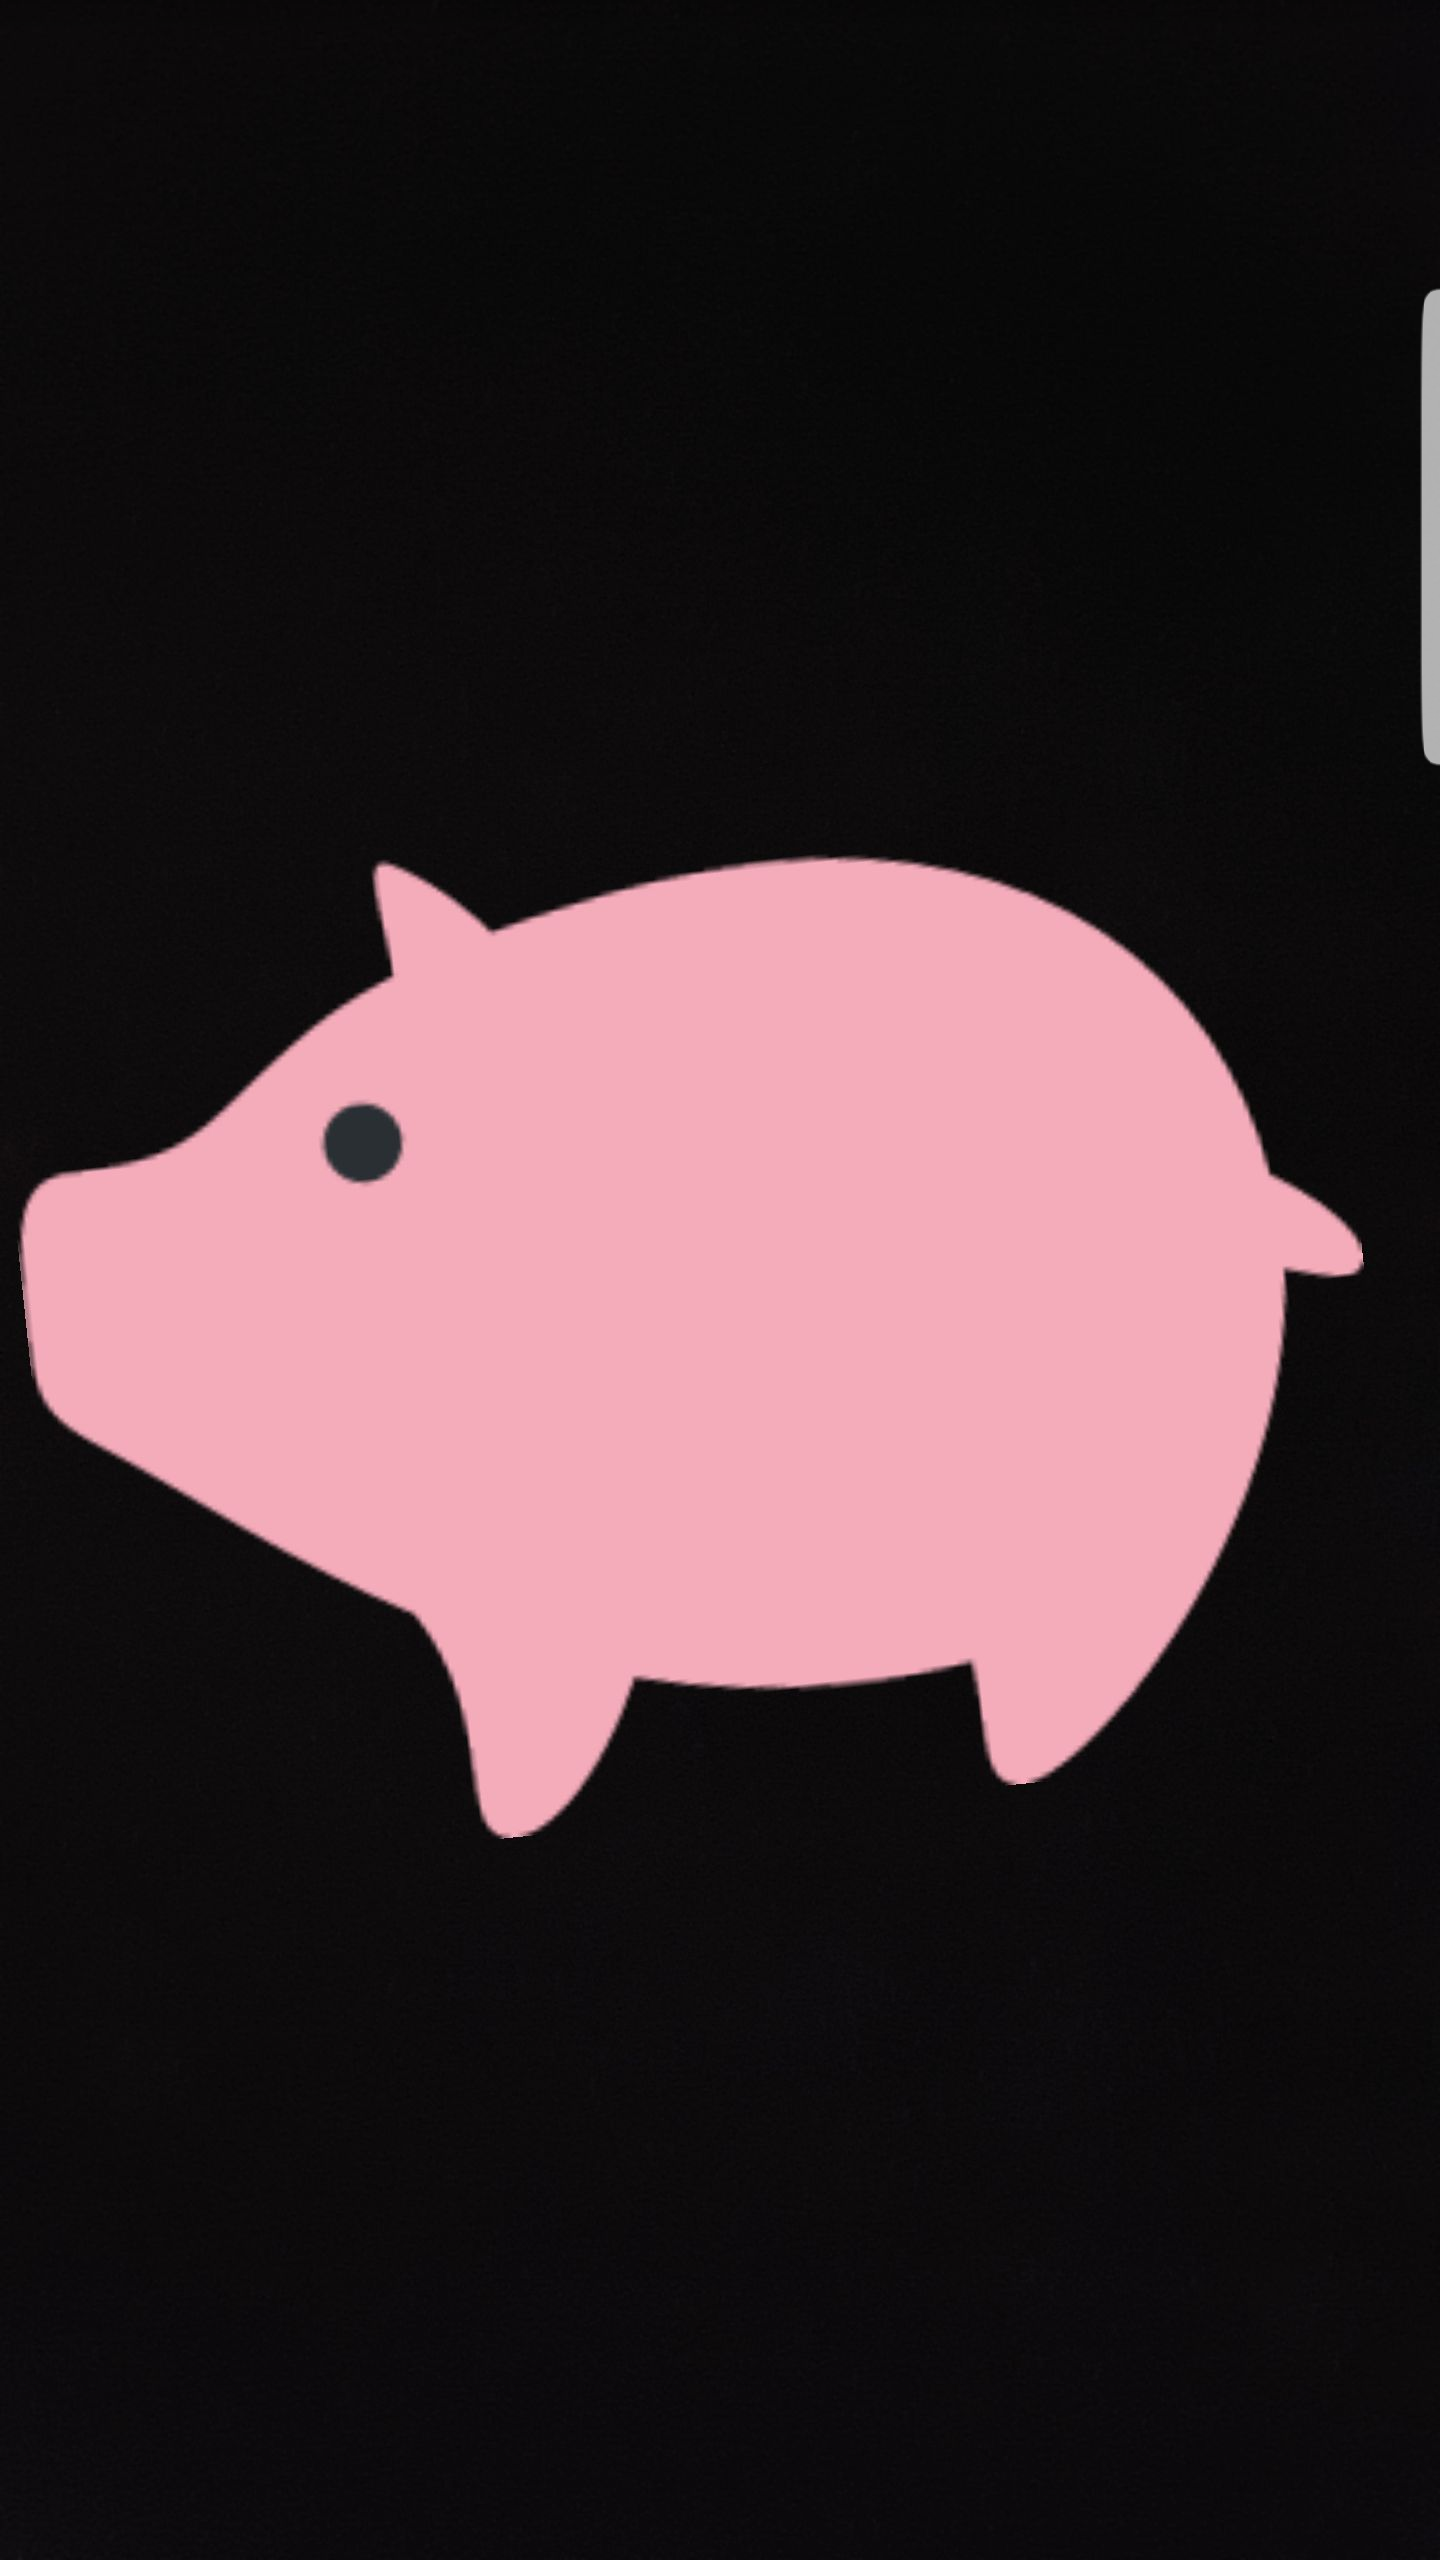 pigs do-not treat psoriasis